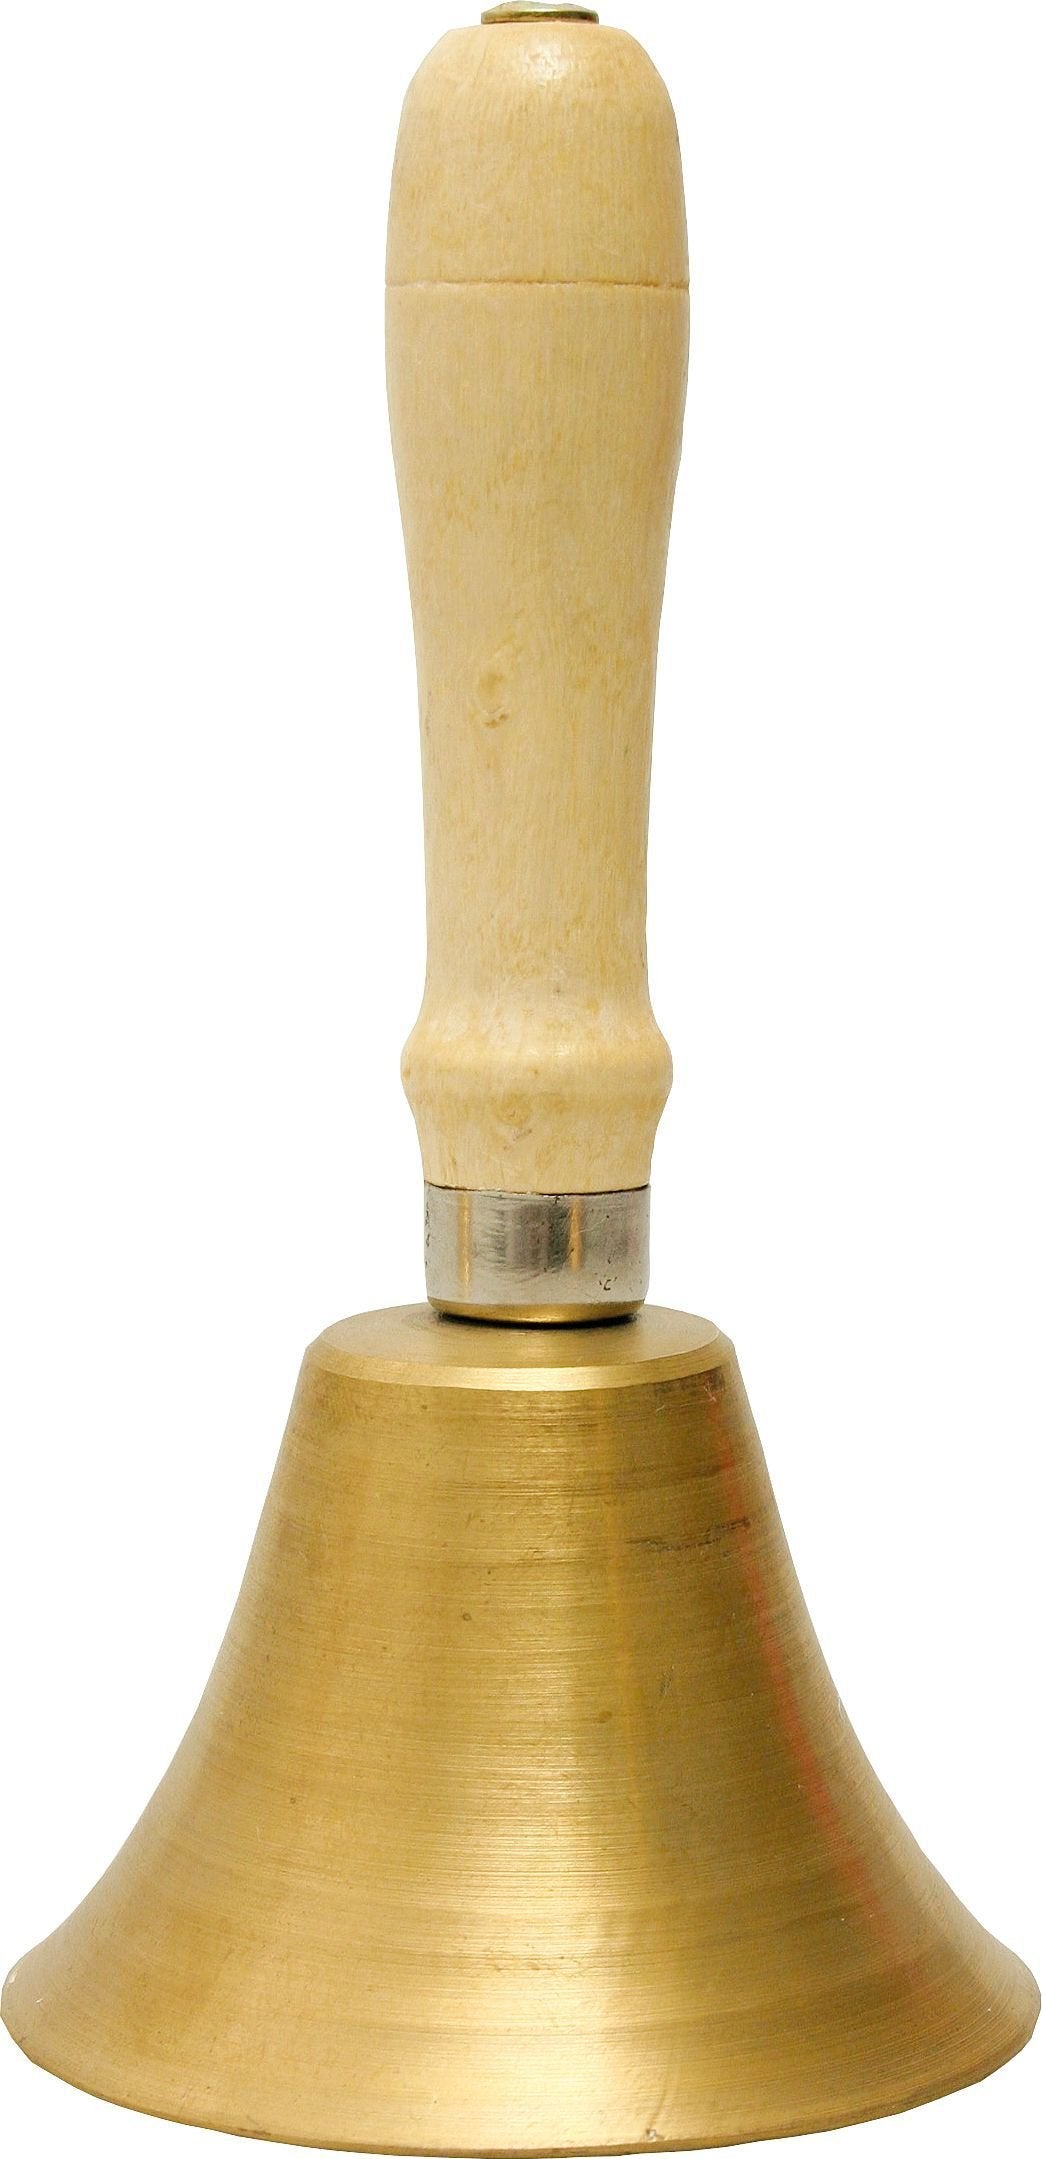 Trefoil School Bell (90mm